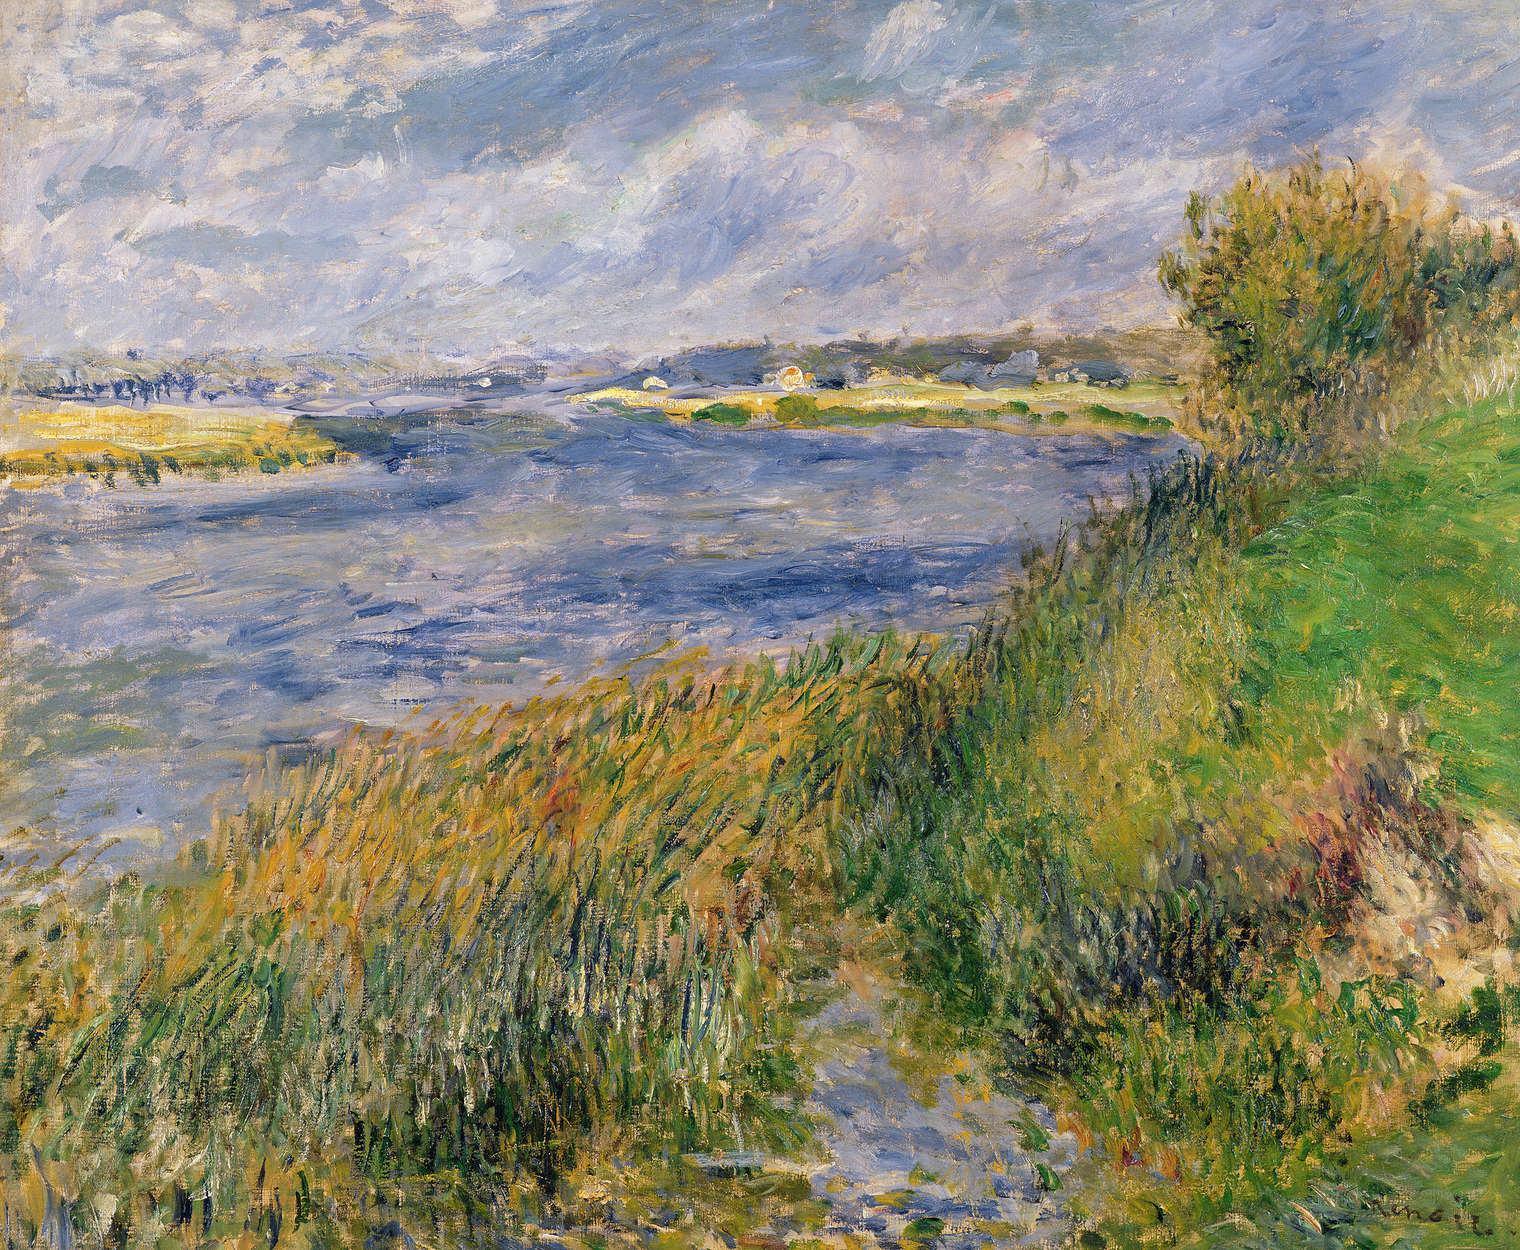             Fotomurali "Le rive della Senna a Champrosay" di Pierre Auguste Renoir
        